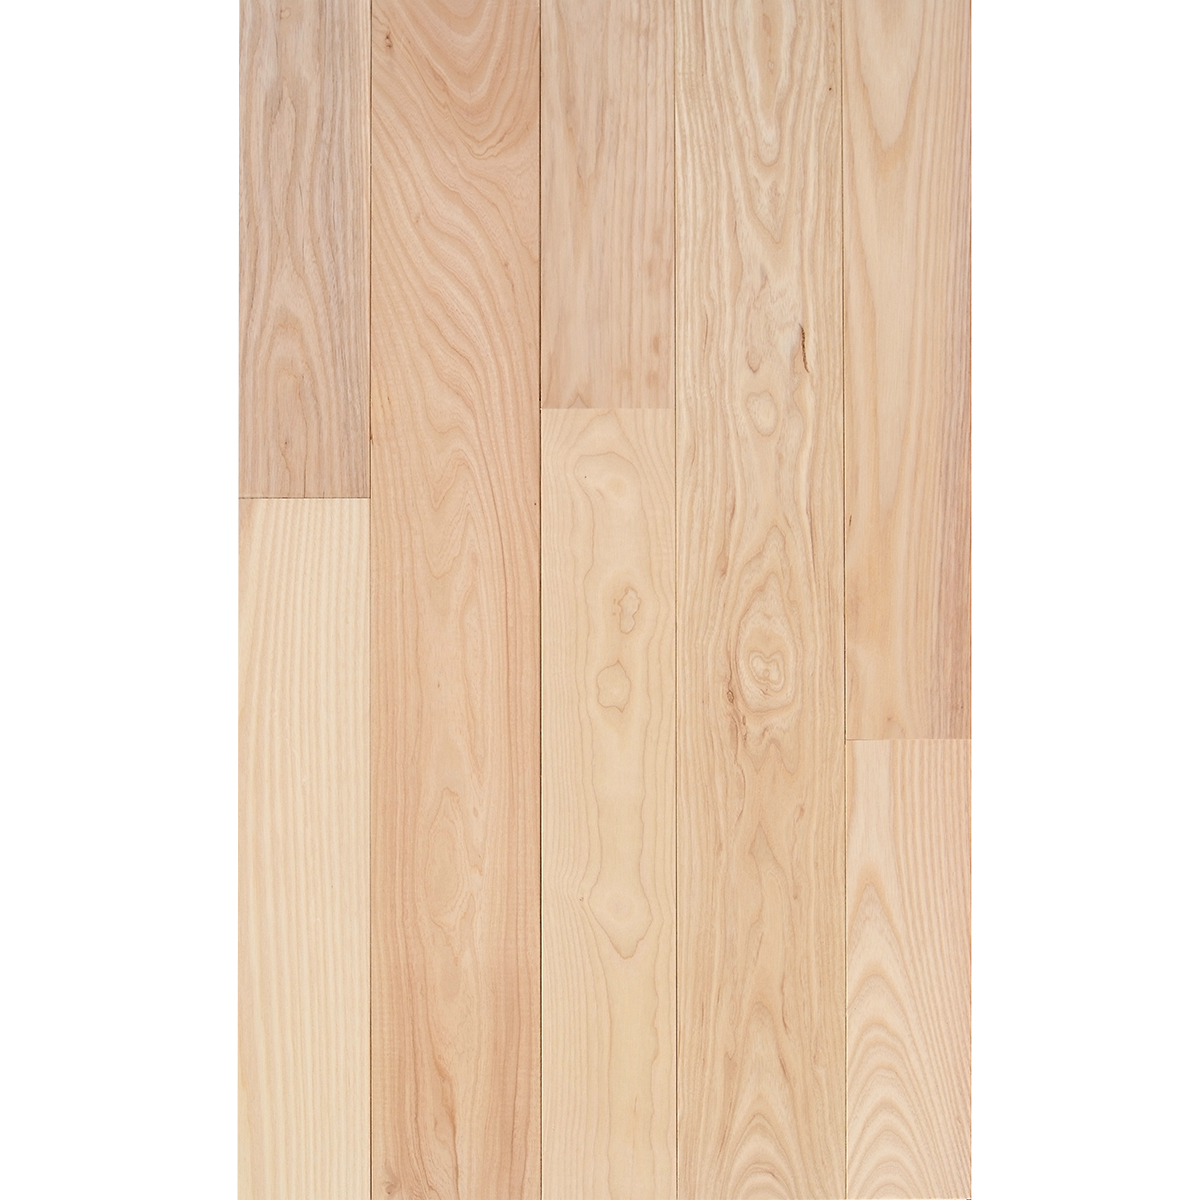 Ash 3 4 X 5 Select Grade Flooring, Select Hardwood Floors